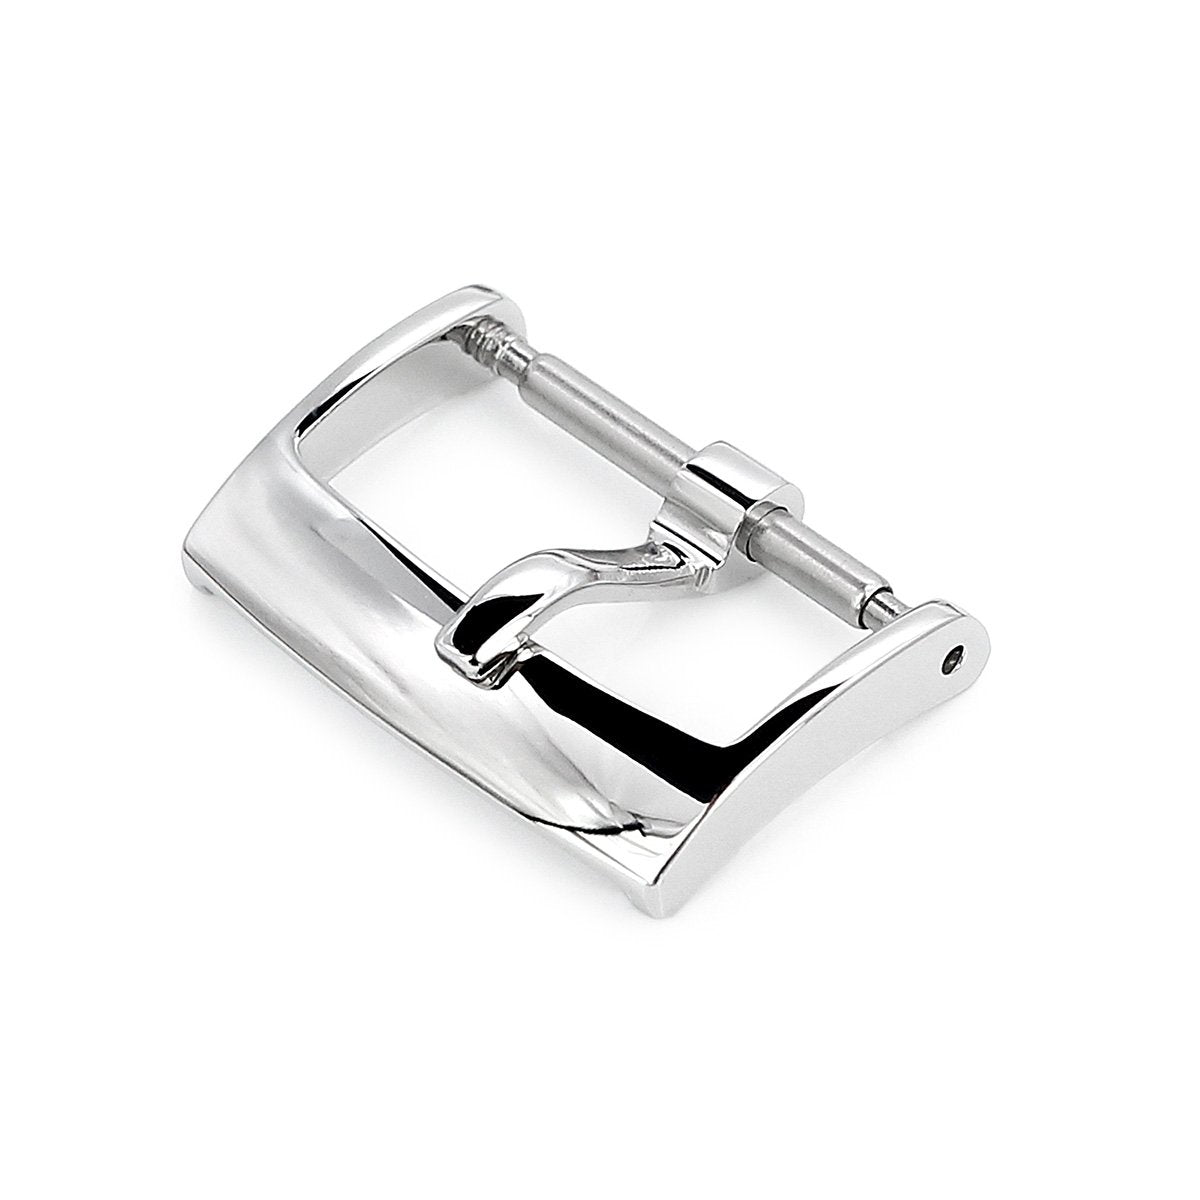 SENWA Stainless Steel Mirror Belt Buckle